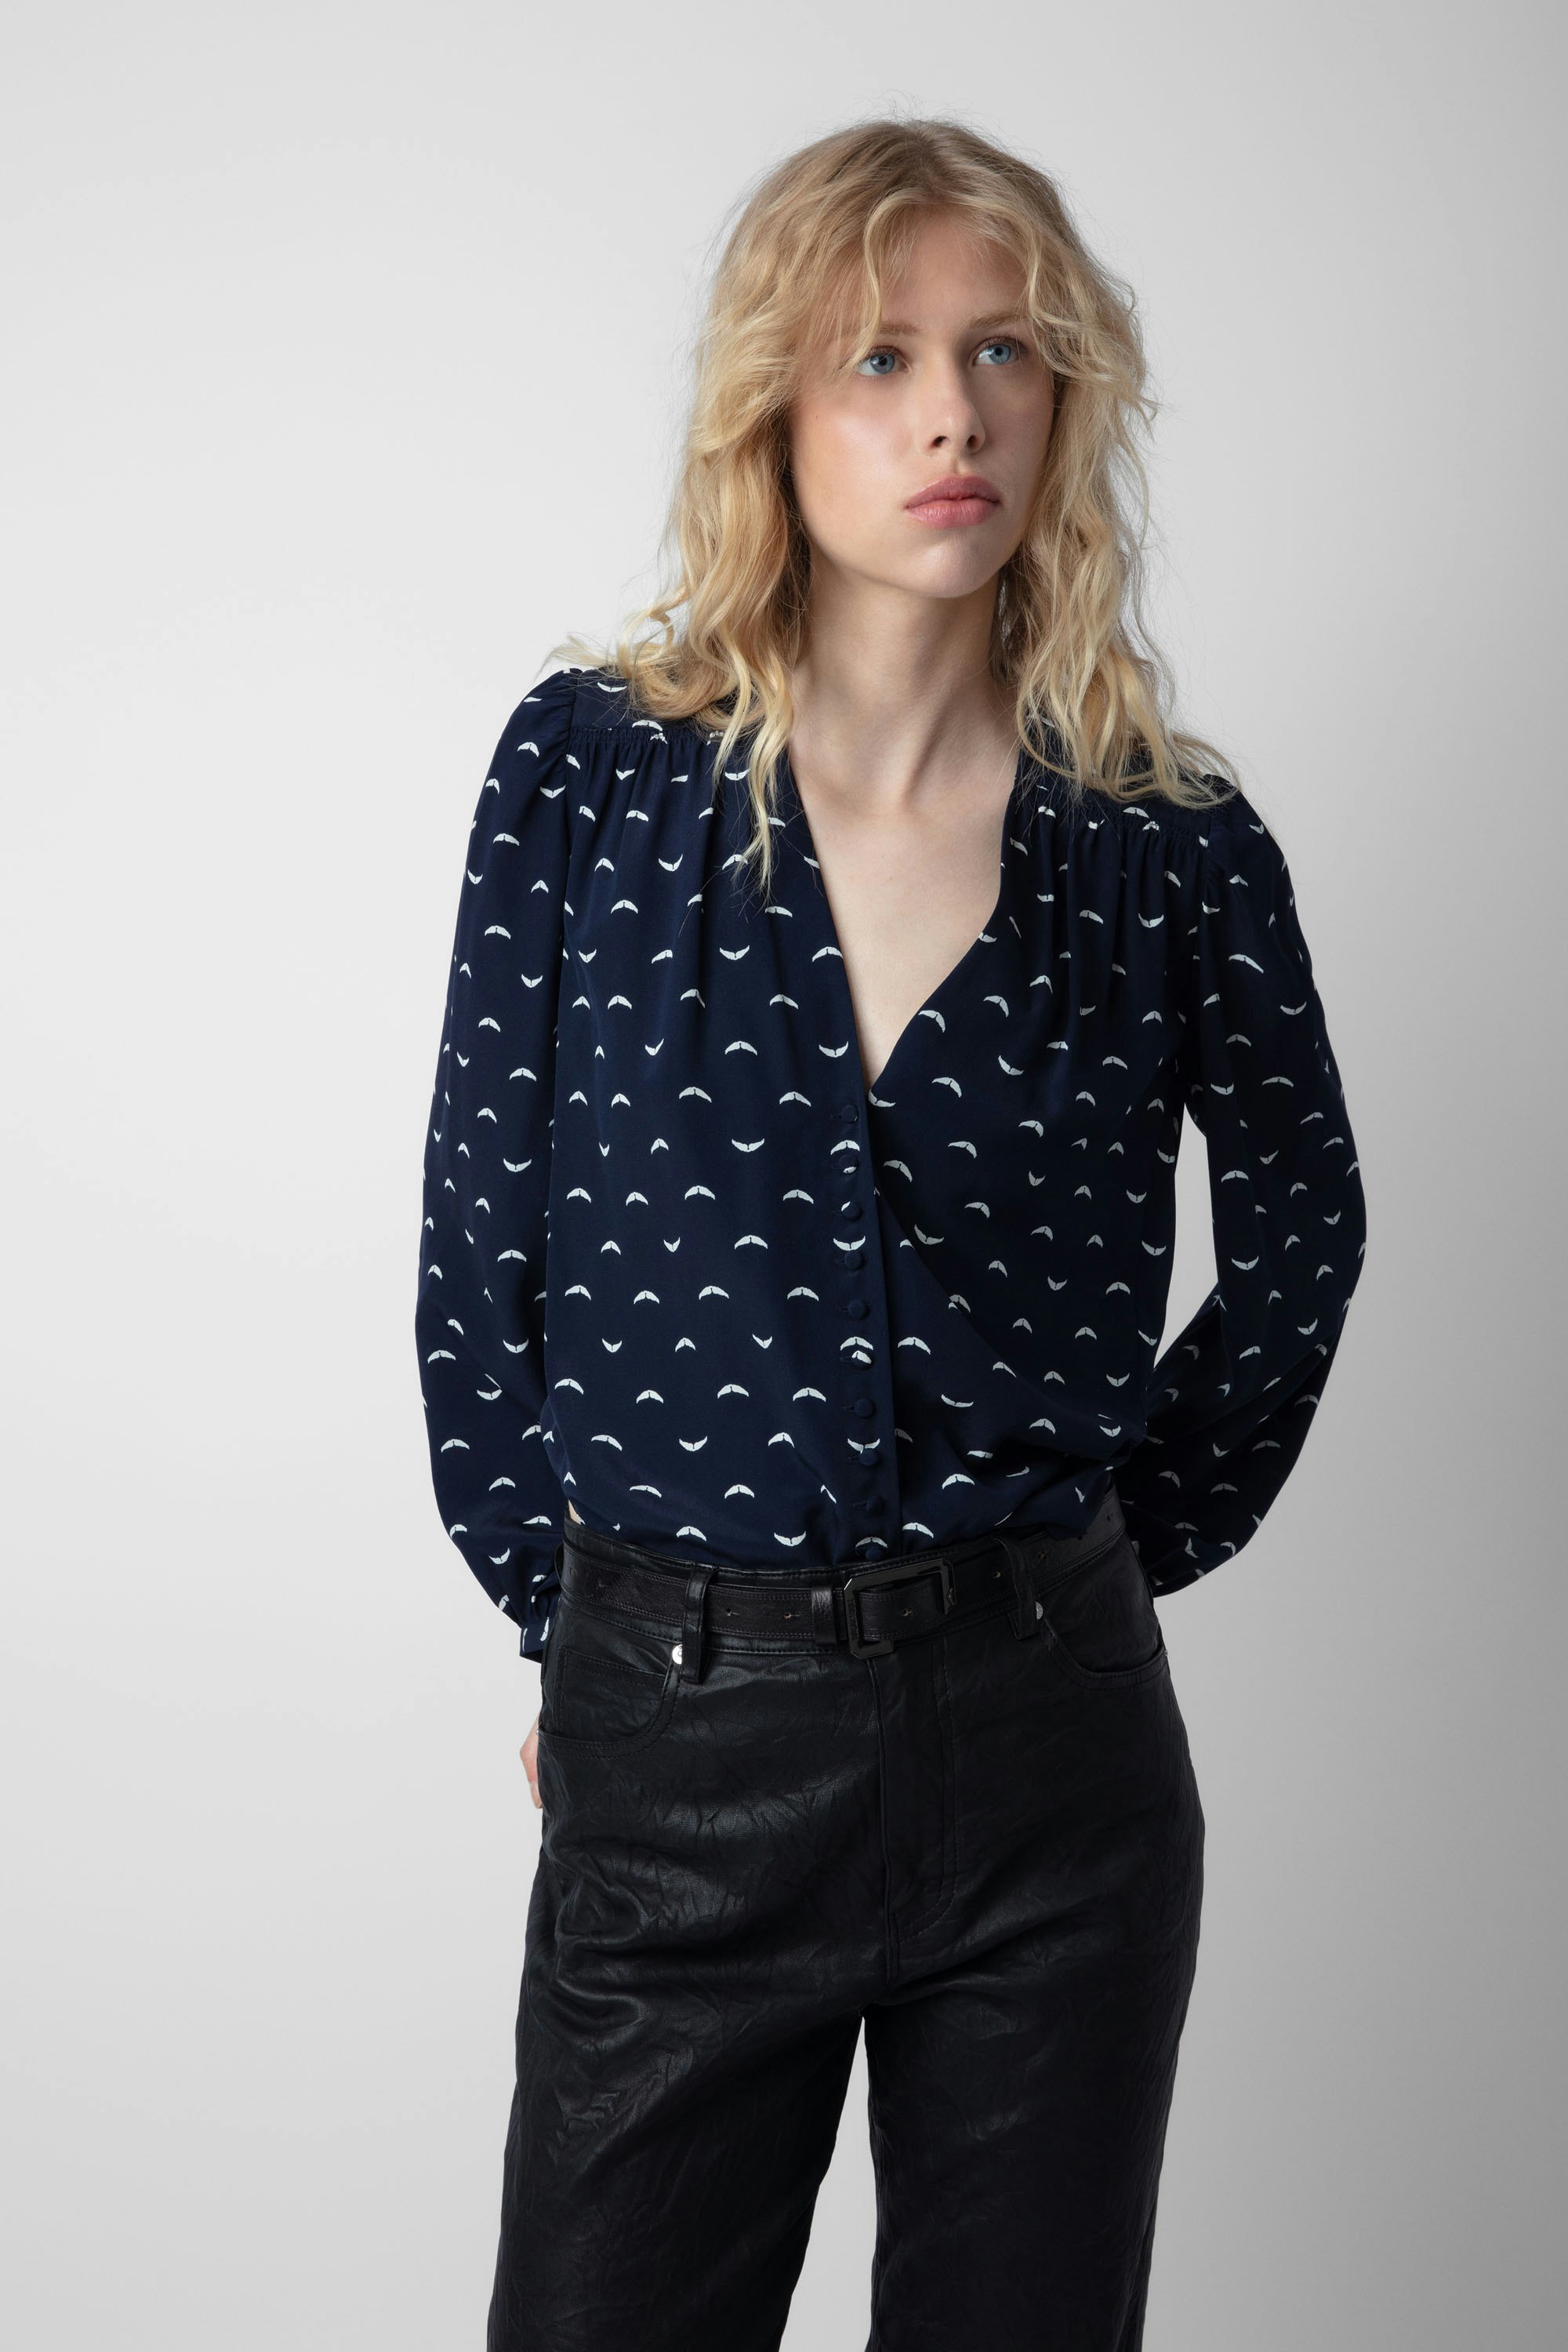 Turin Silk blouse - Women’s navy blue silk shirt with wings print.